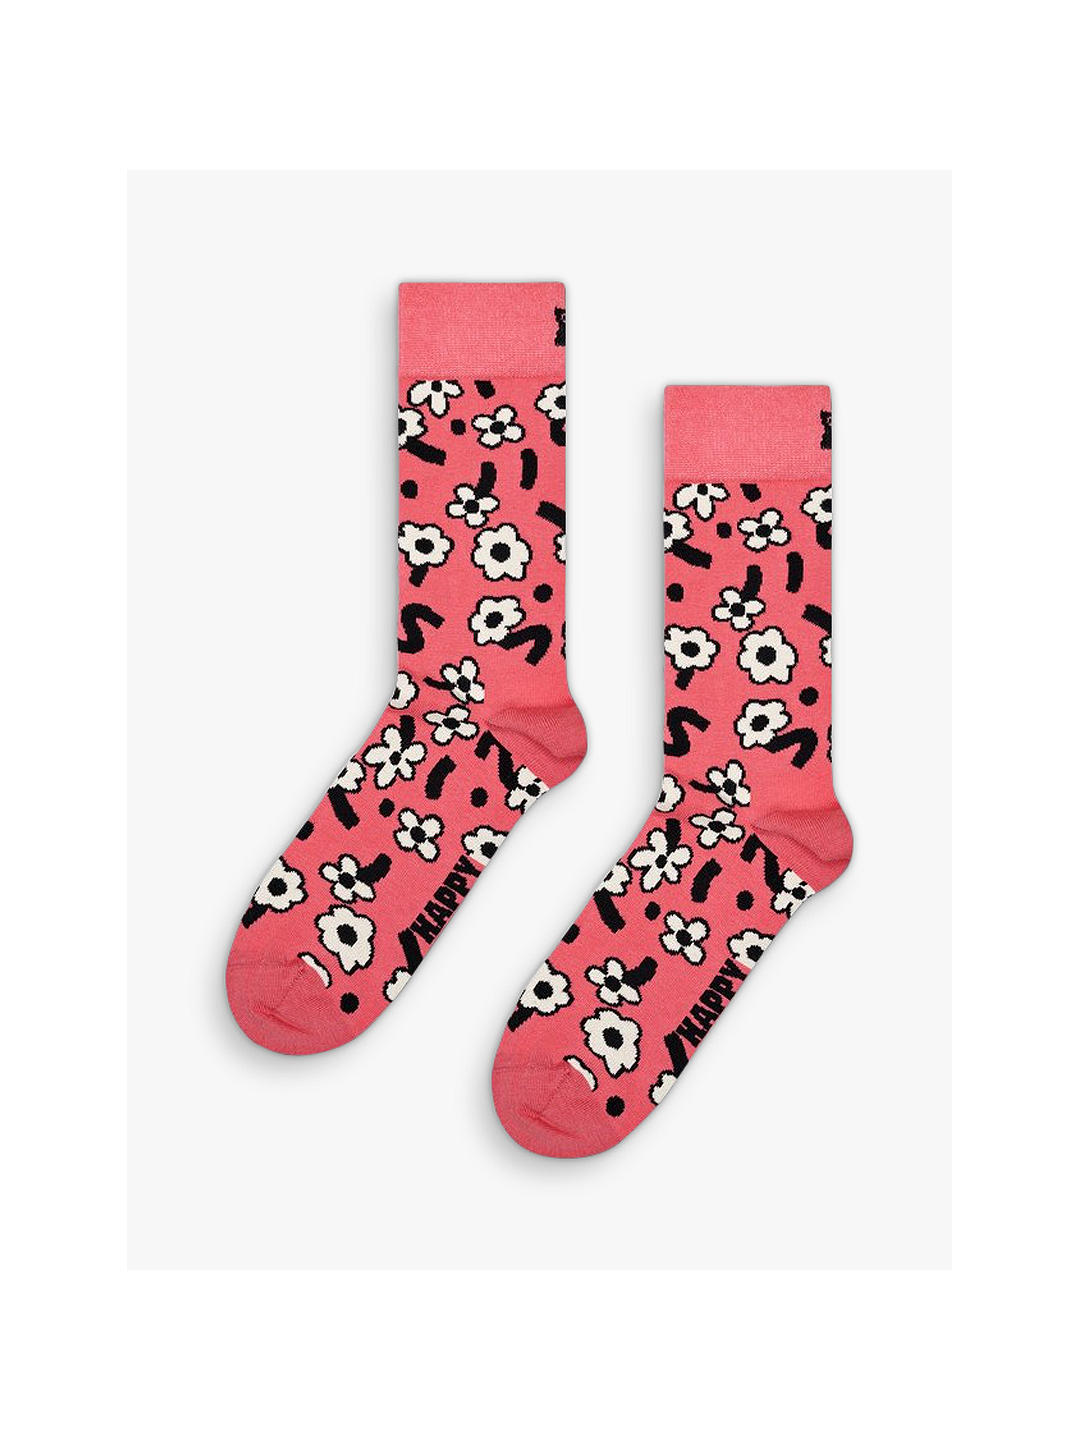 Happy Socks Dancing Flowers Socks, One Size, Dark Pink/Multi